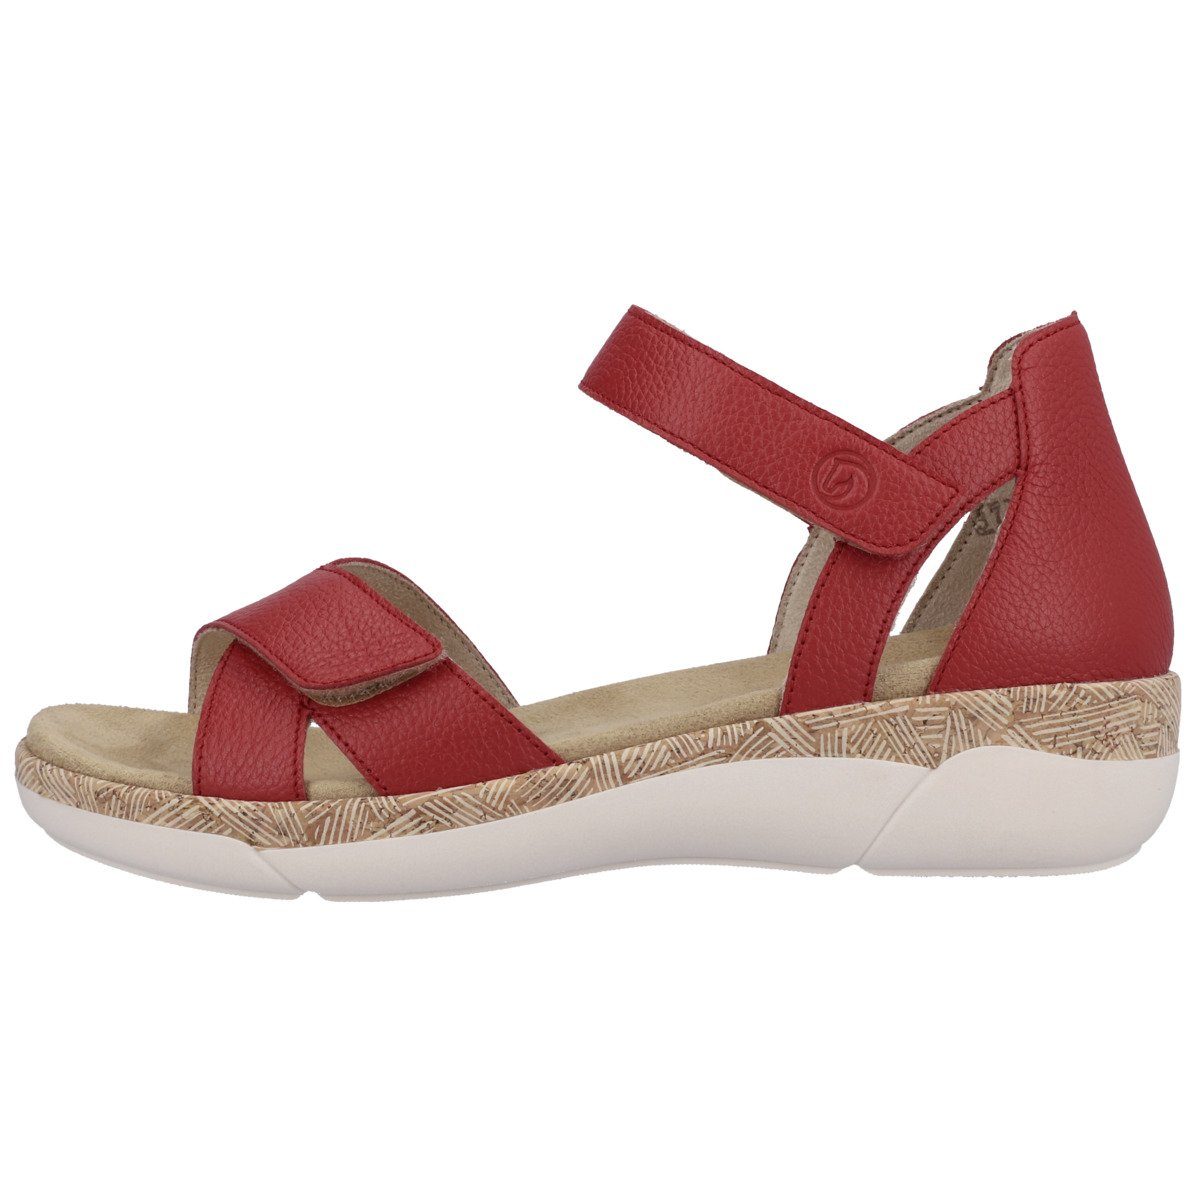 Remonte R6859 Damen Sandale besonderen Merkmale rot keine